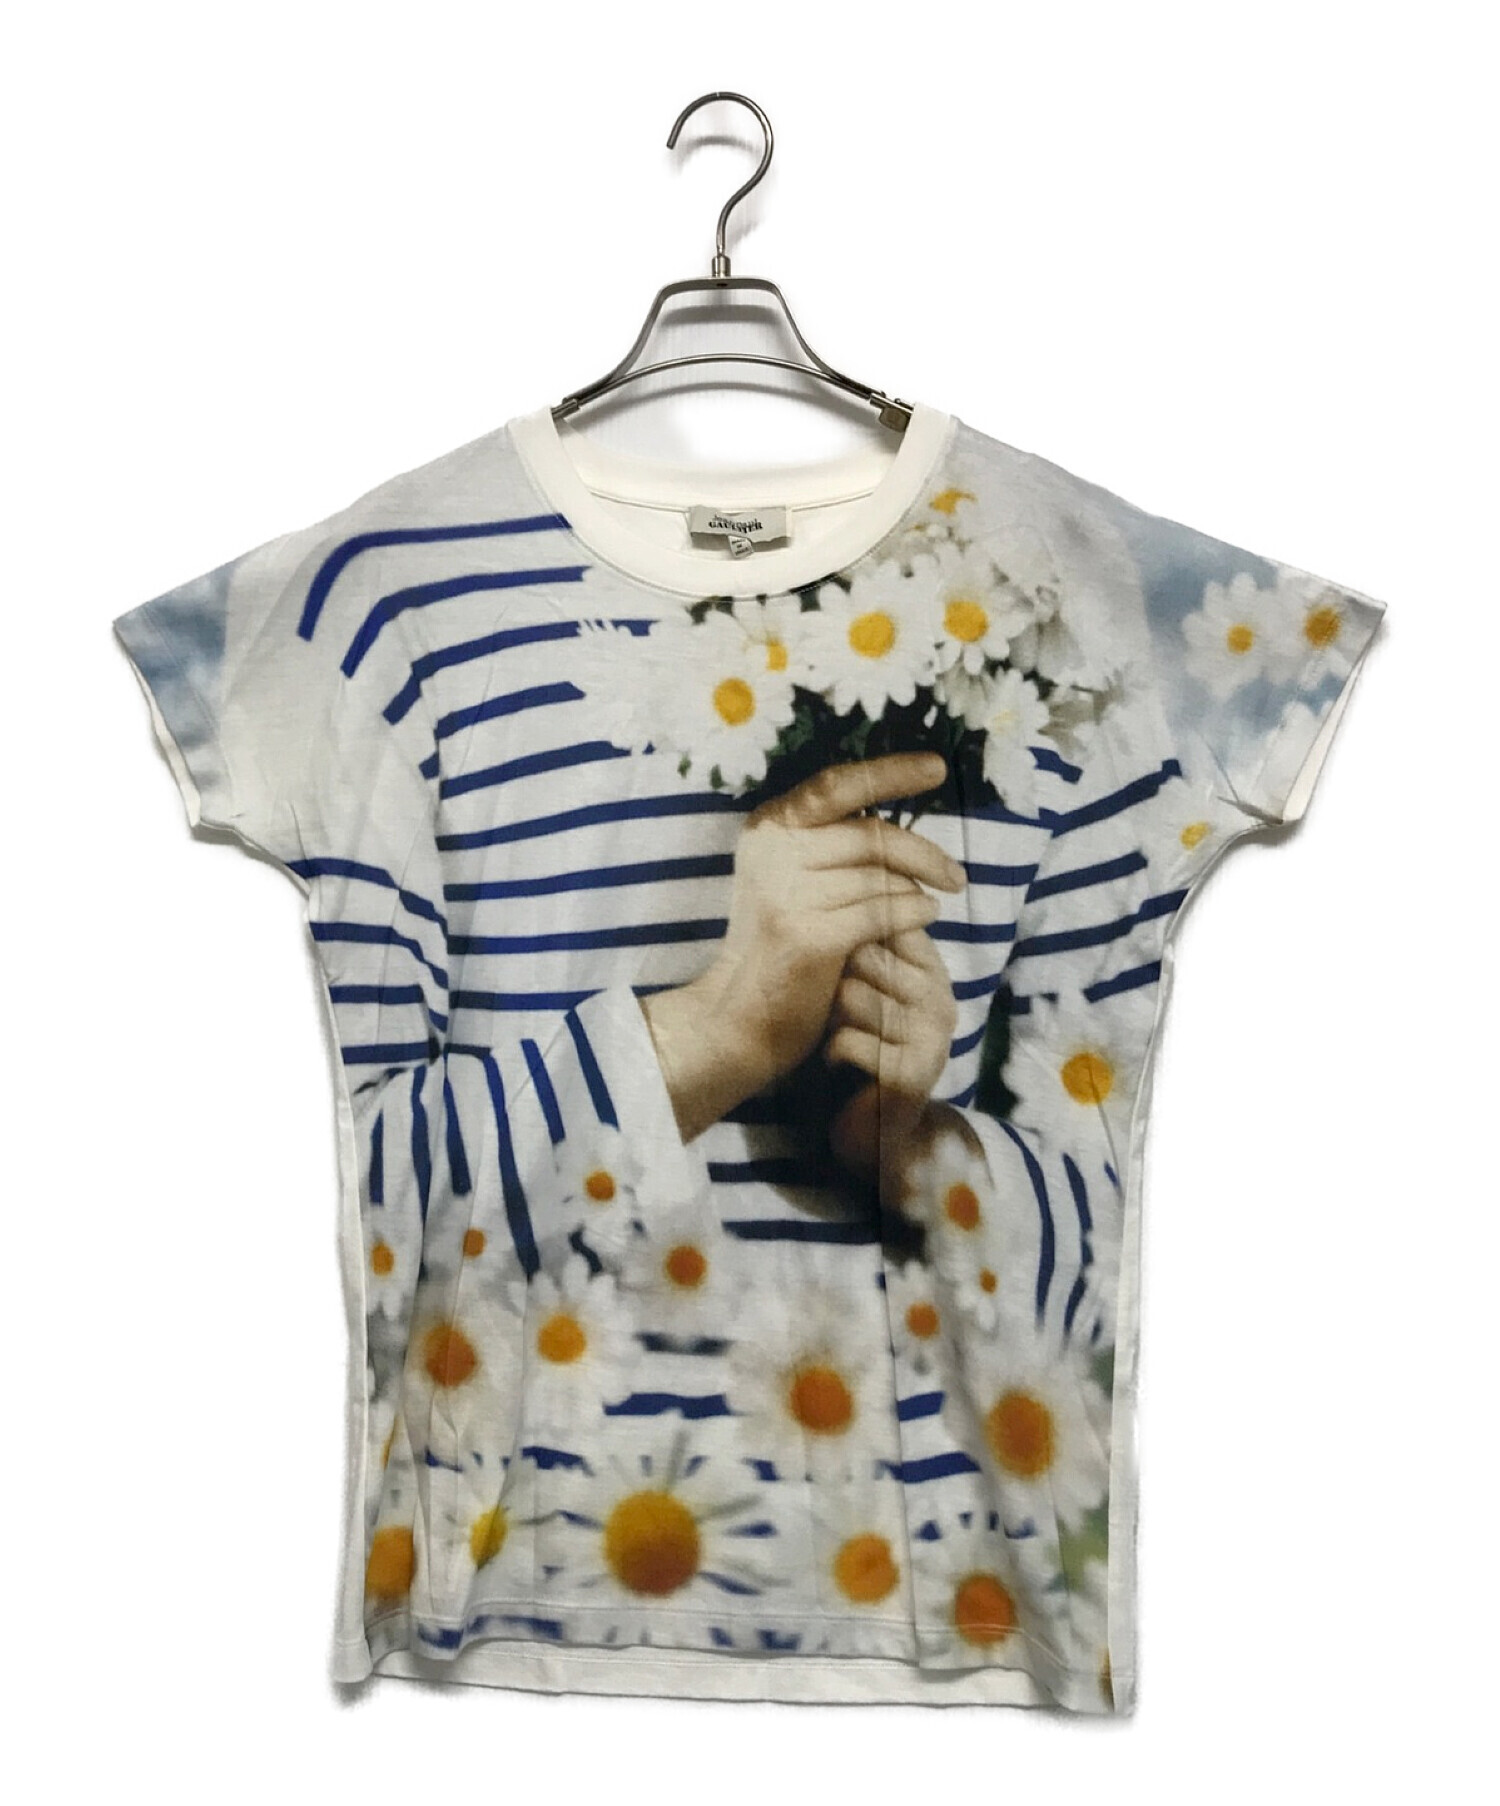 Jean Paul Gaultier HOMME ゴルチェ チェーン付きtシャツ購入希望です